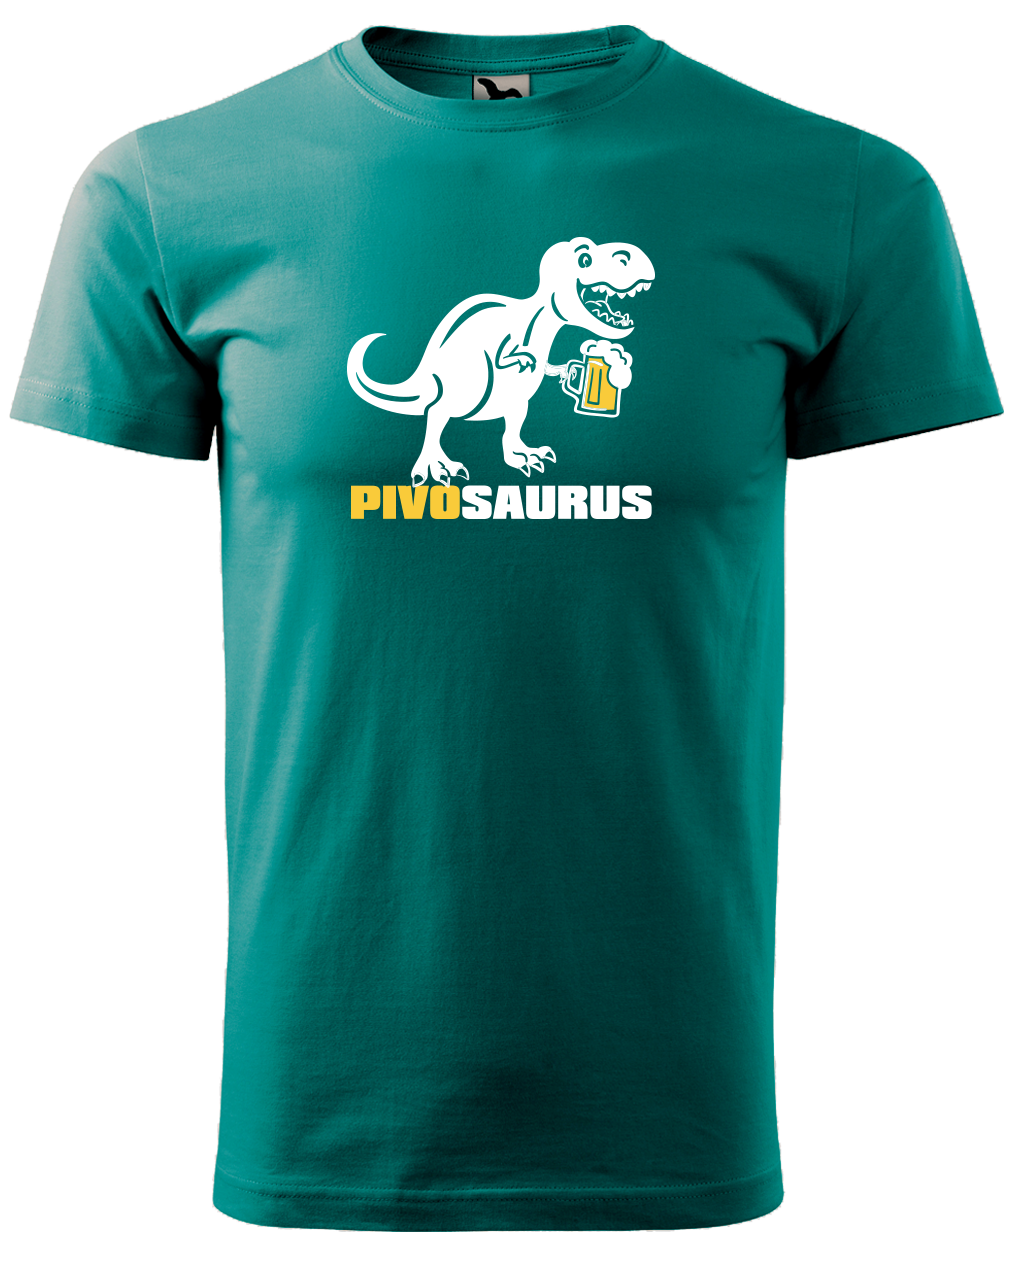 Vtipné tričko - Pivosaurus Velikost: M, Barva: Emerald (19)